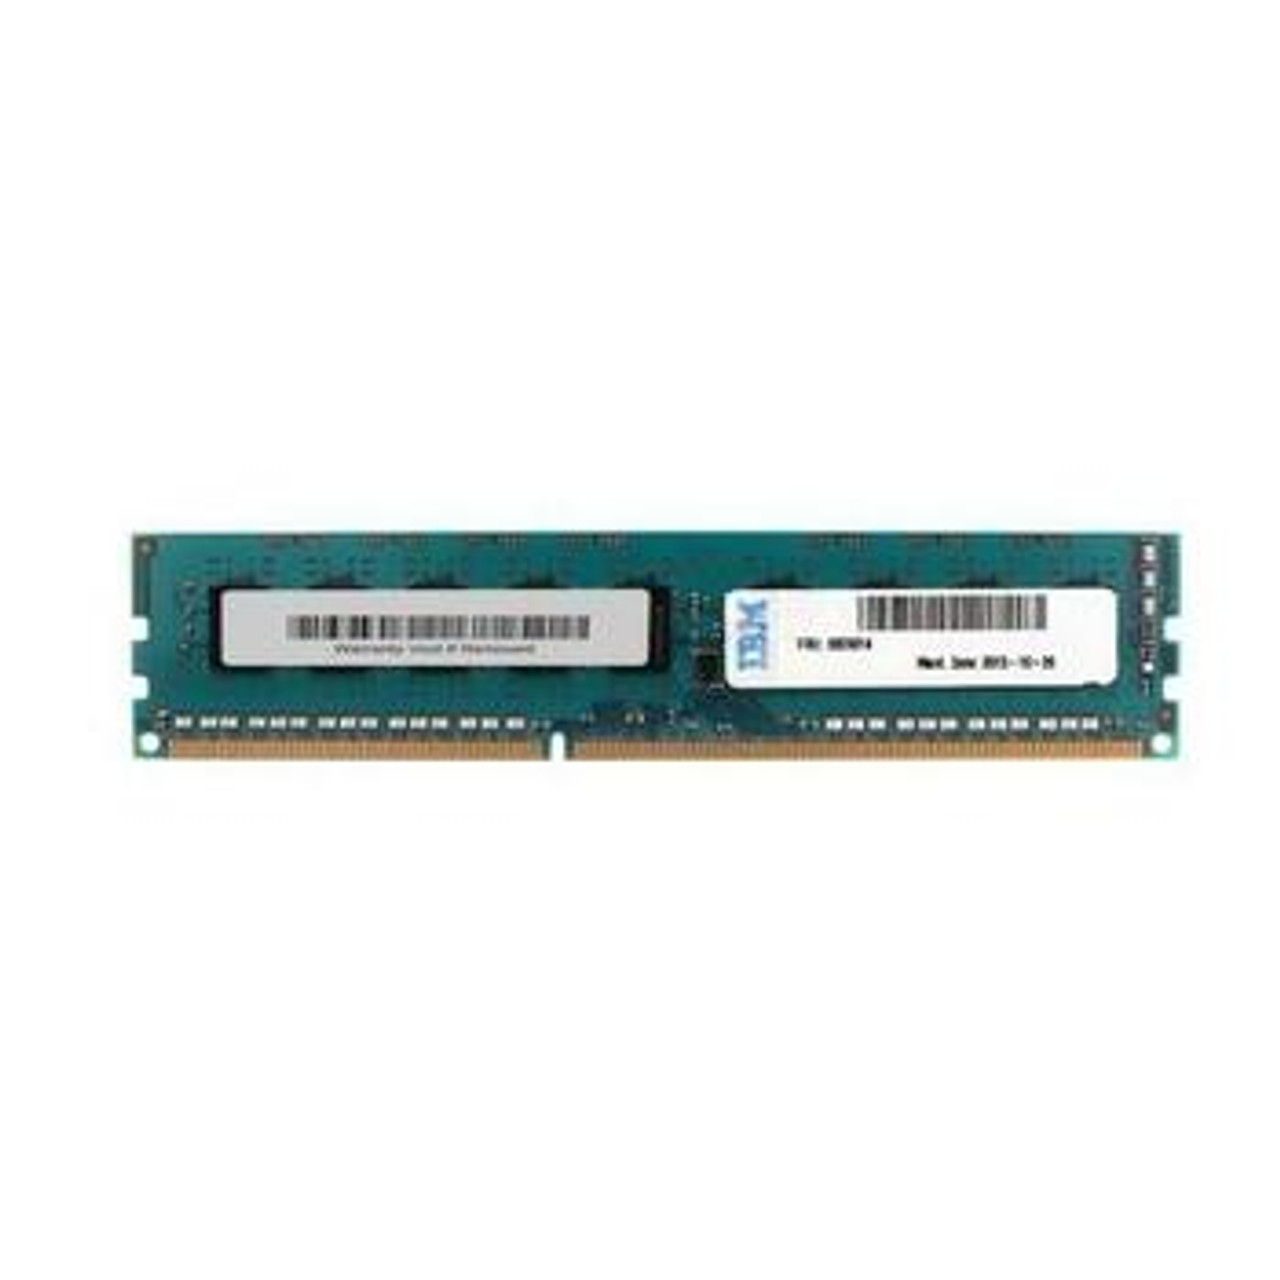 00D5014 IBM 4GB DDR3 Registered ECC PC3-12800 1600Mhz 2Rx8 Memory